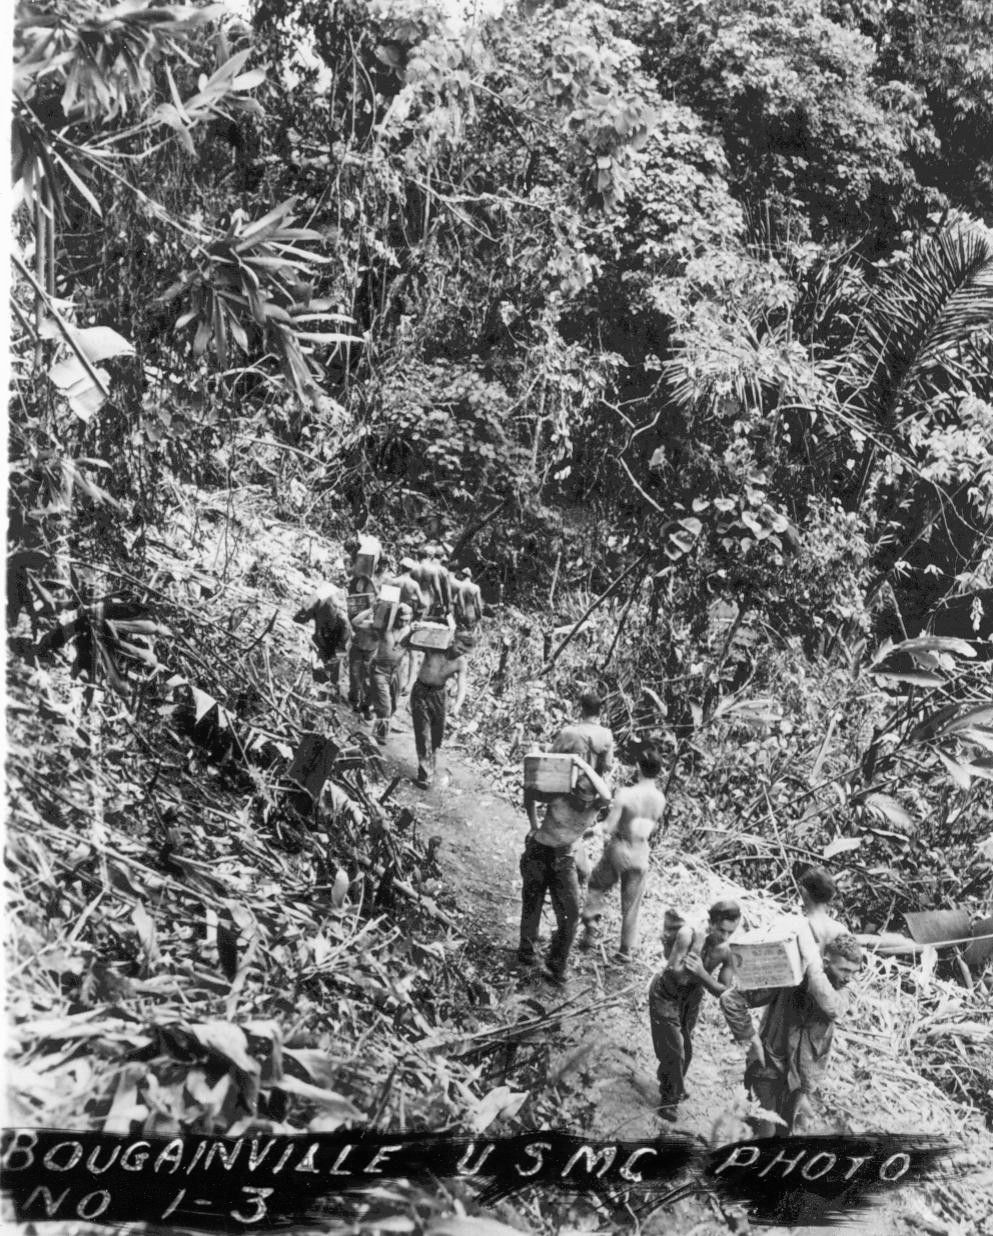 US Marines, Bougainville, Solomon Islands, 1943-1944